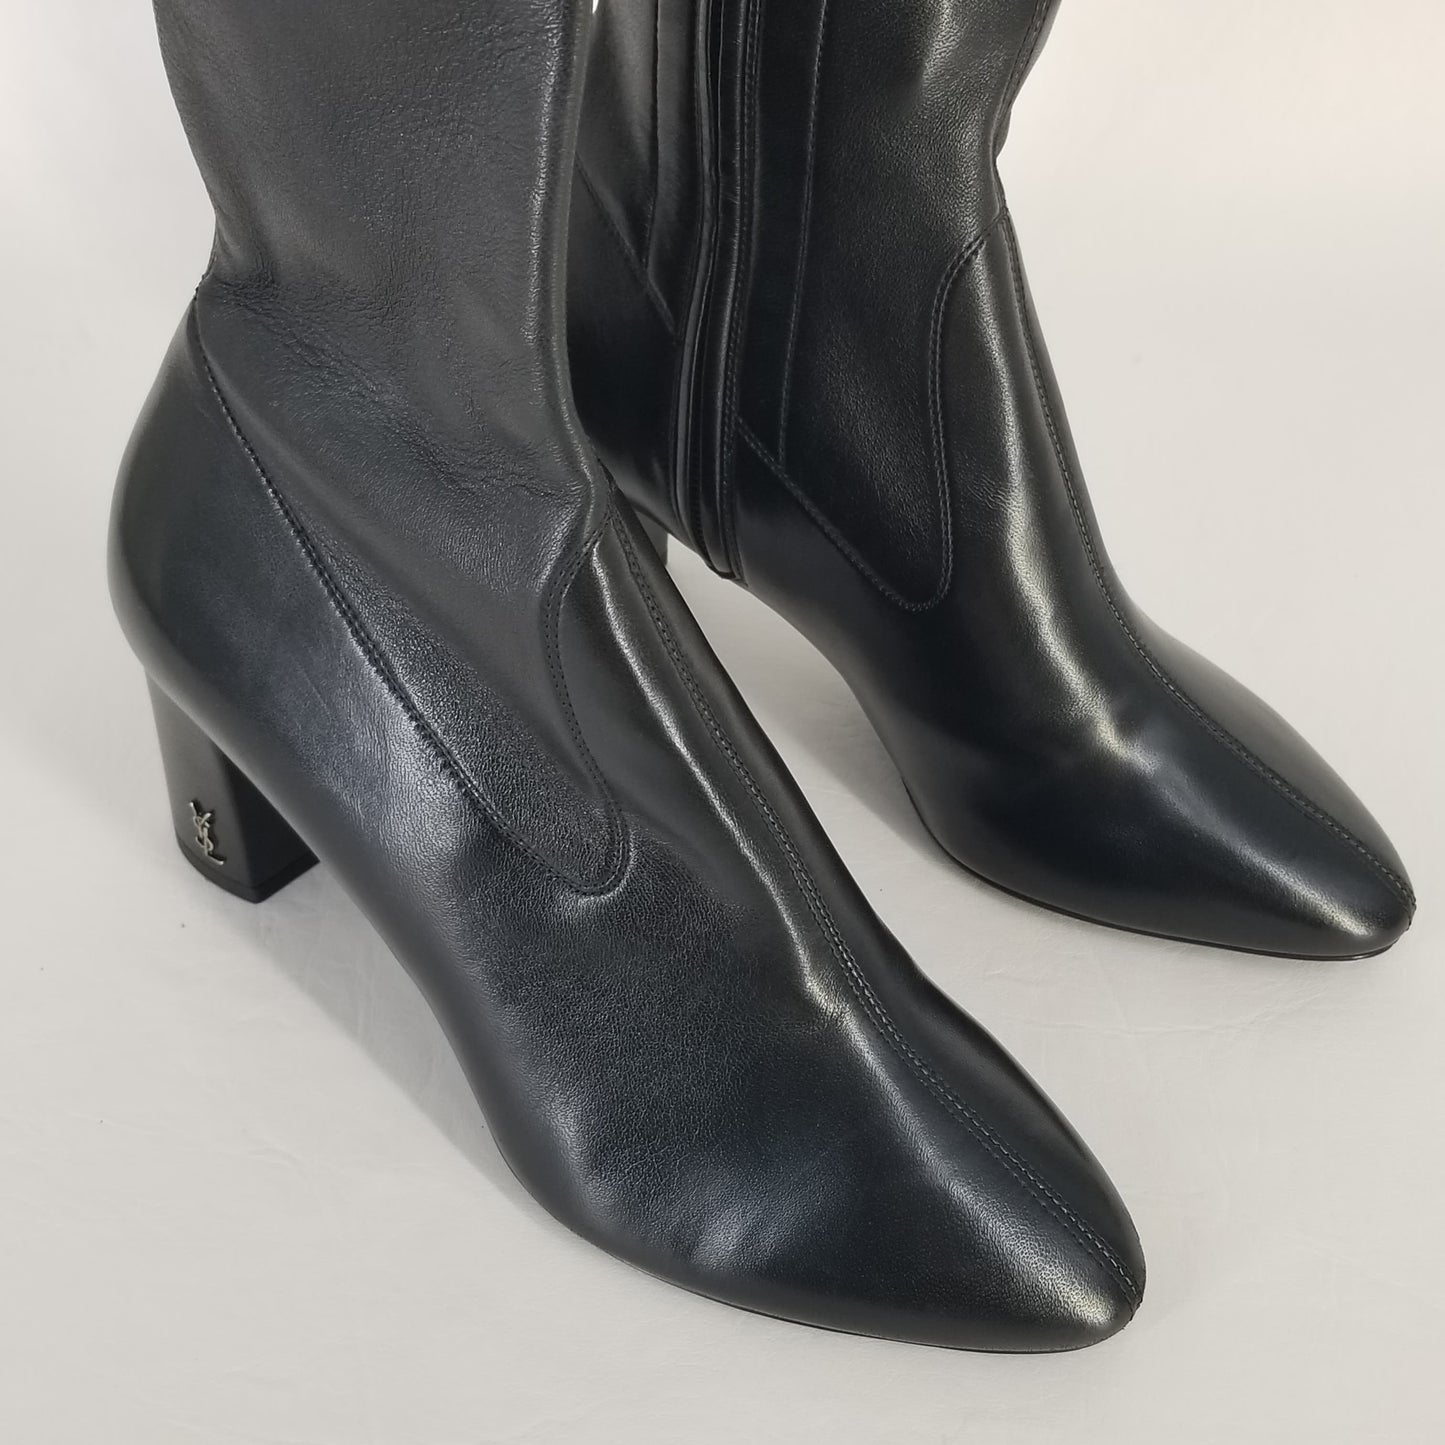 Authentic Saint Laurent Black Thigh High Leather Boots